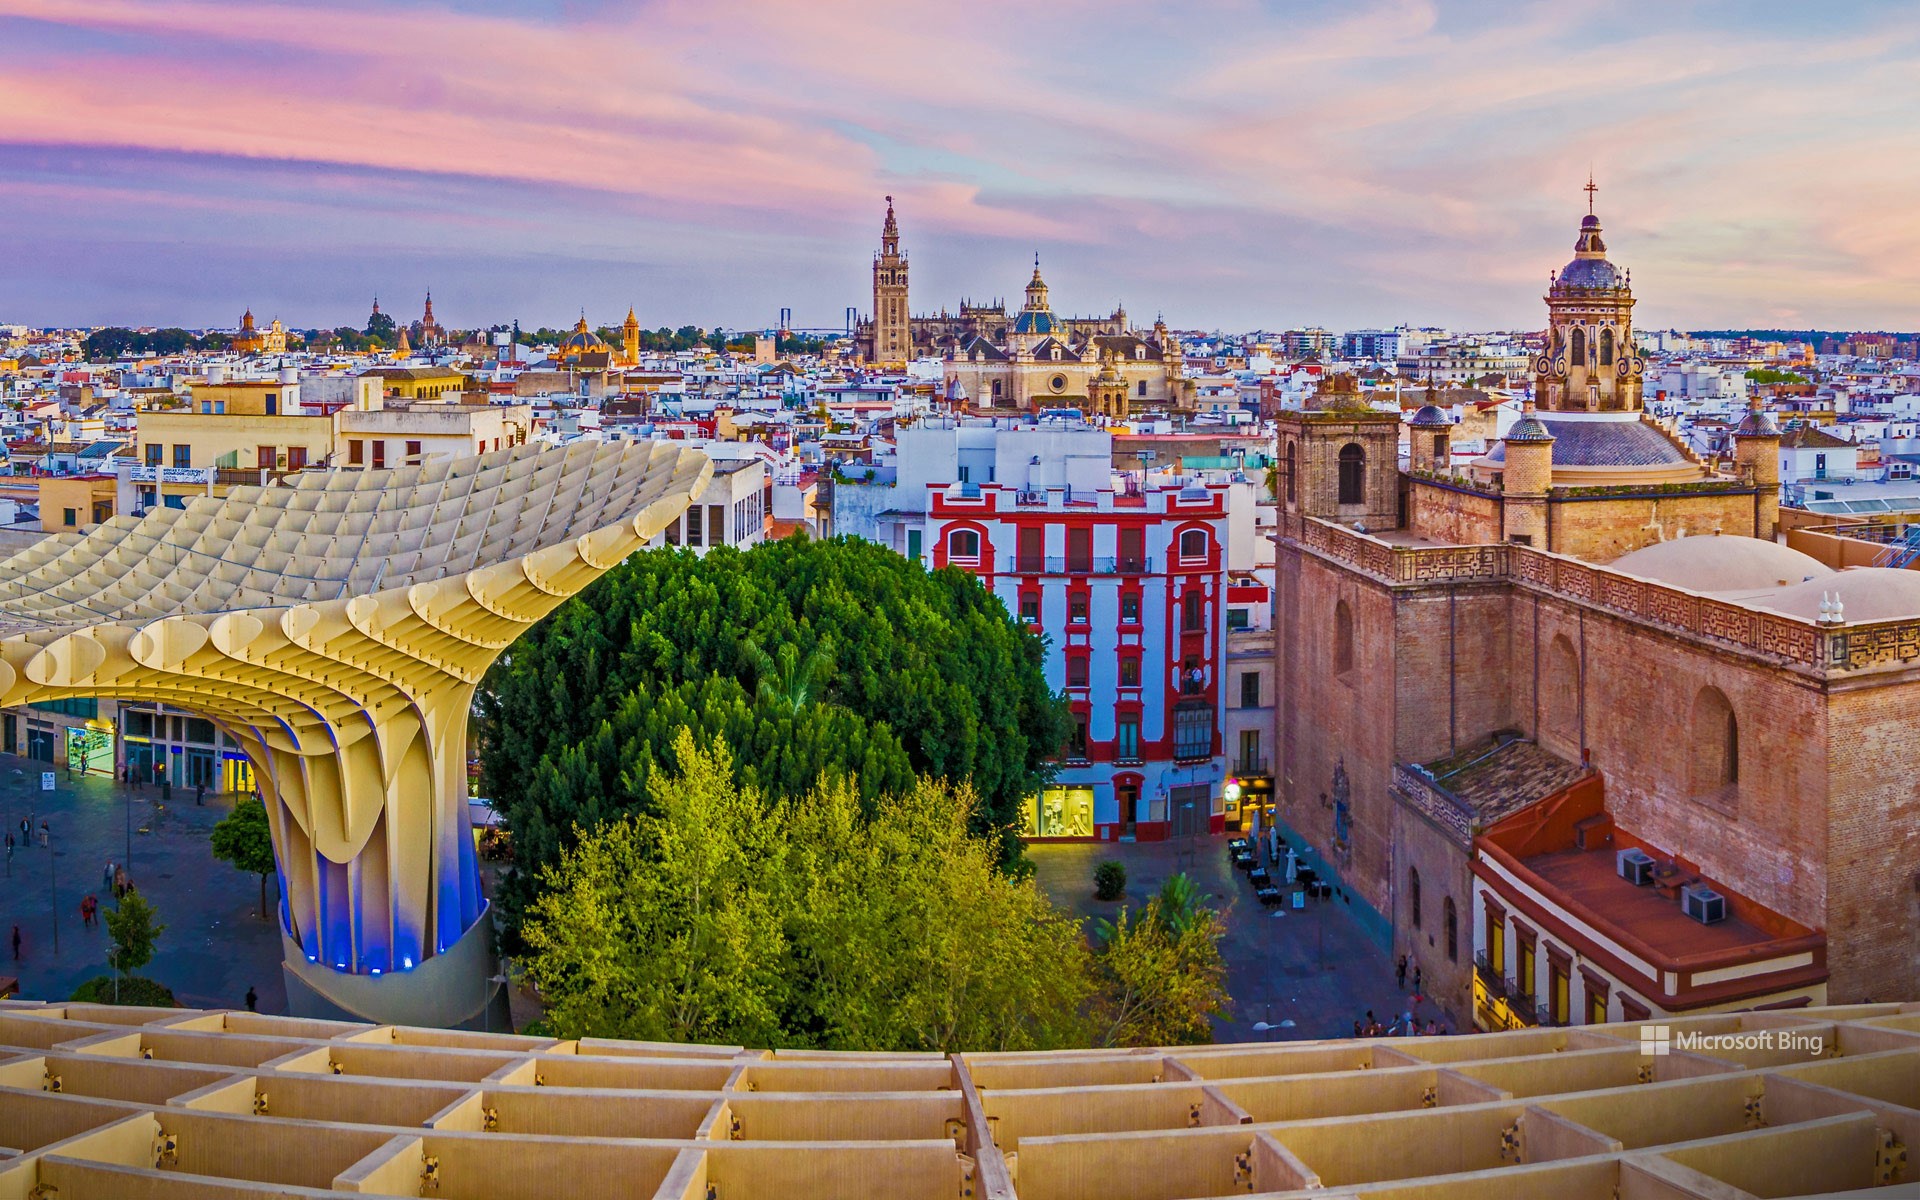 View of the city from the Setas de Sevilla (Metropol Parasol) in Seville, Spain